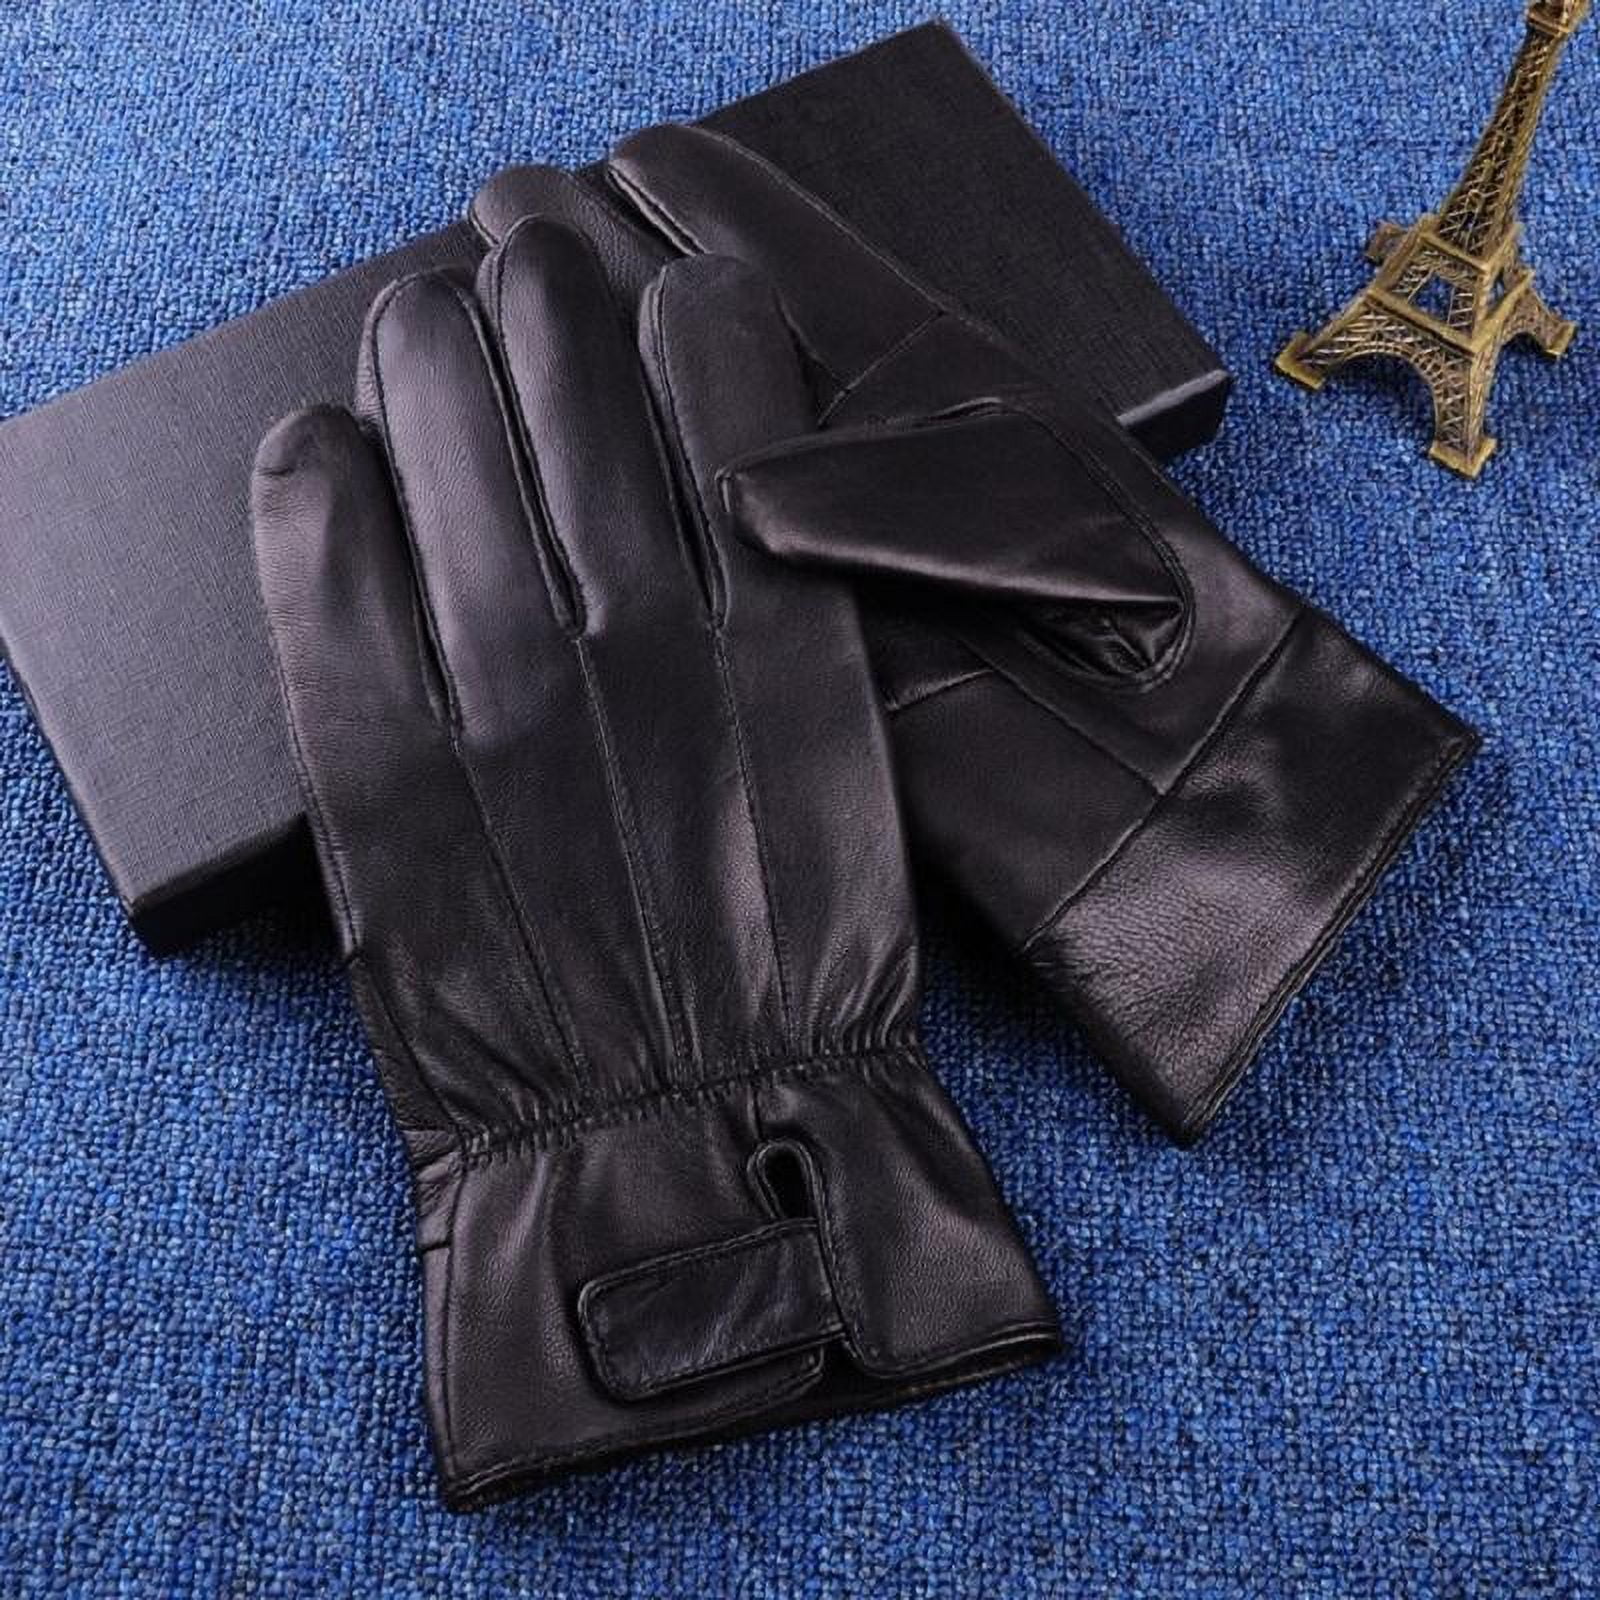 Mens Winter Black Leather Gloves For Driving Dress Real Sheepskin ...